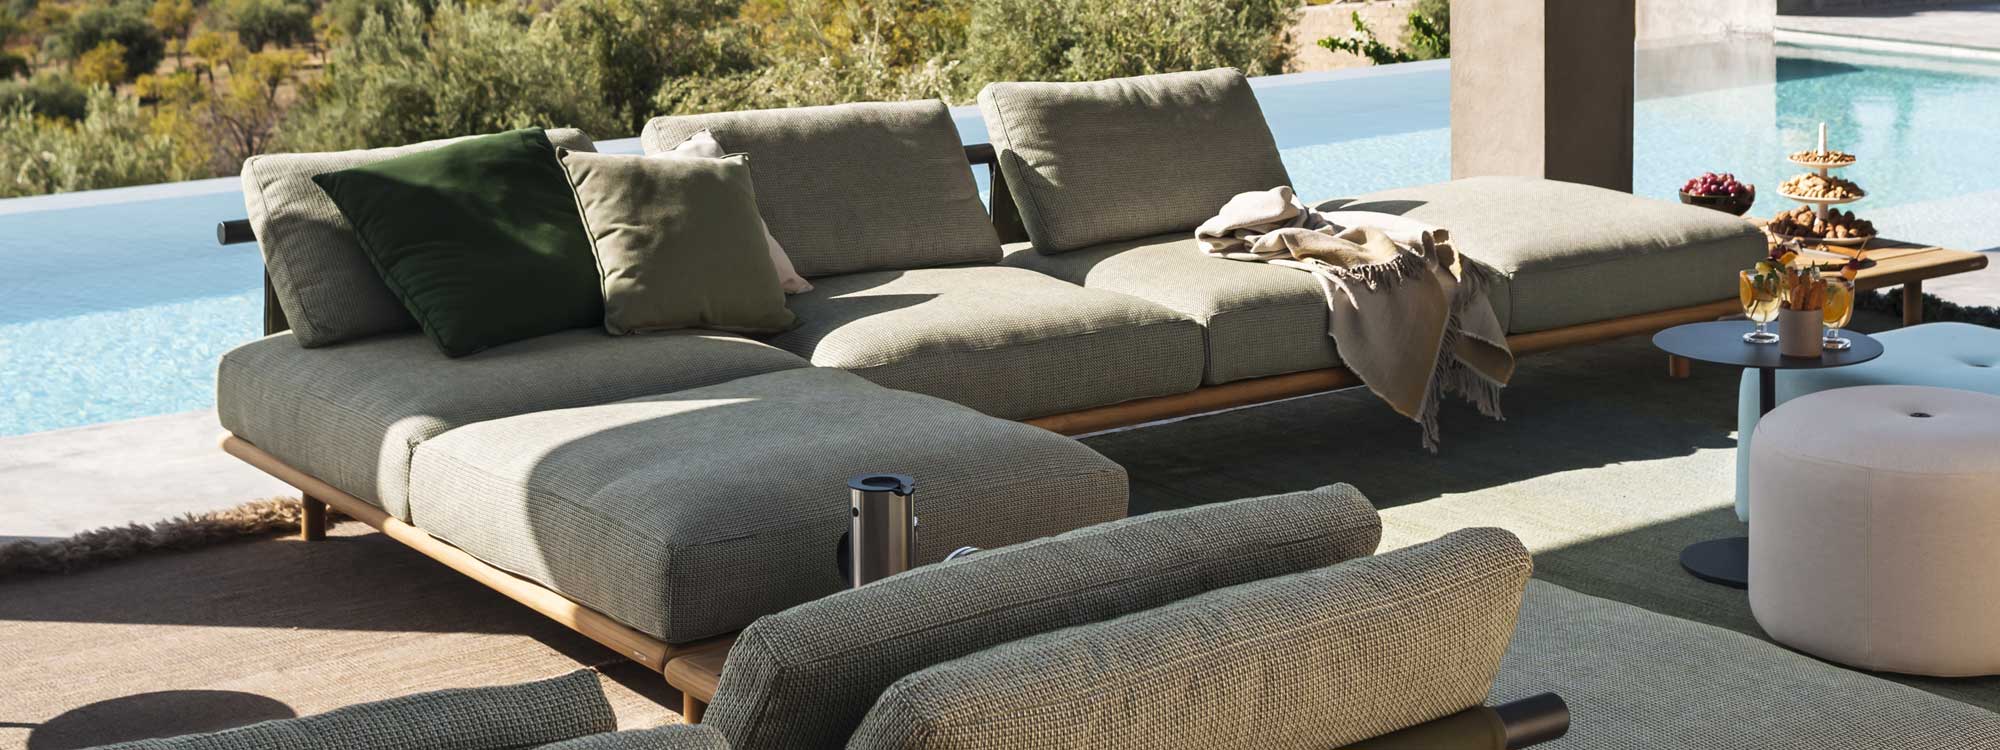 Image of Eden modern modular garden sofa by RODA in sun and shade of alluring poolside terrace